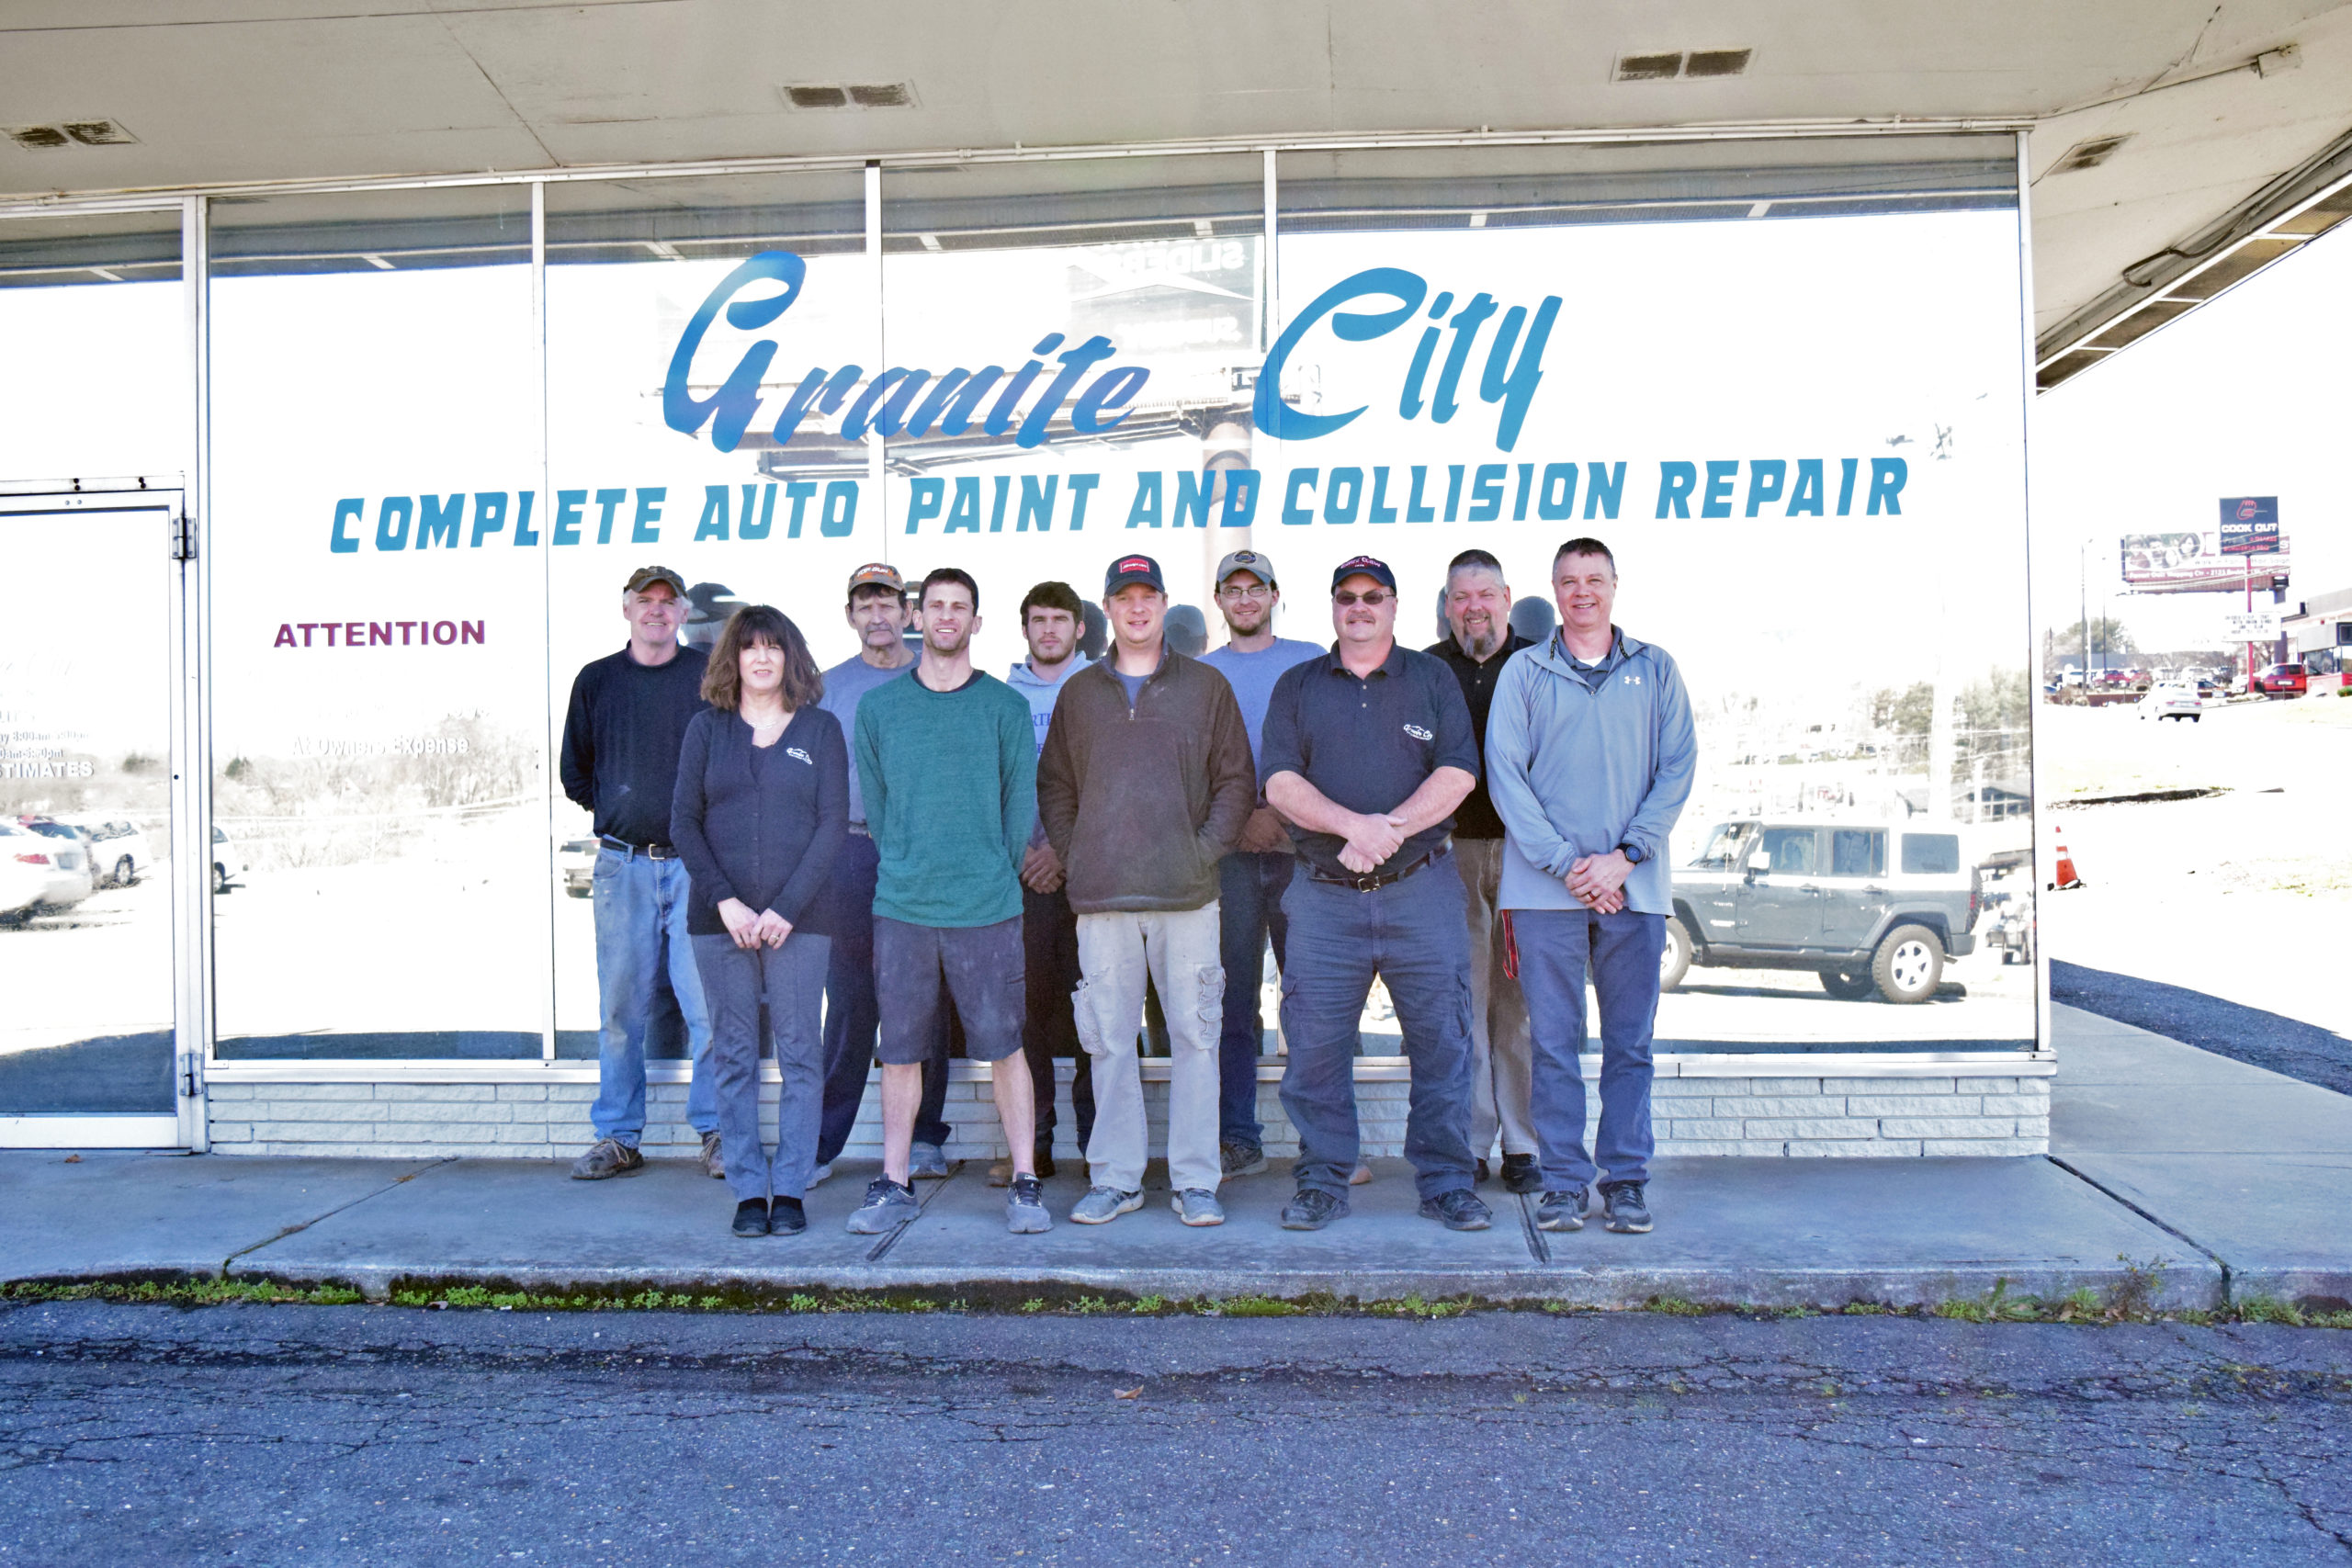 Granite City Staff